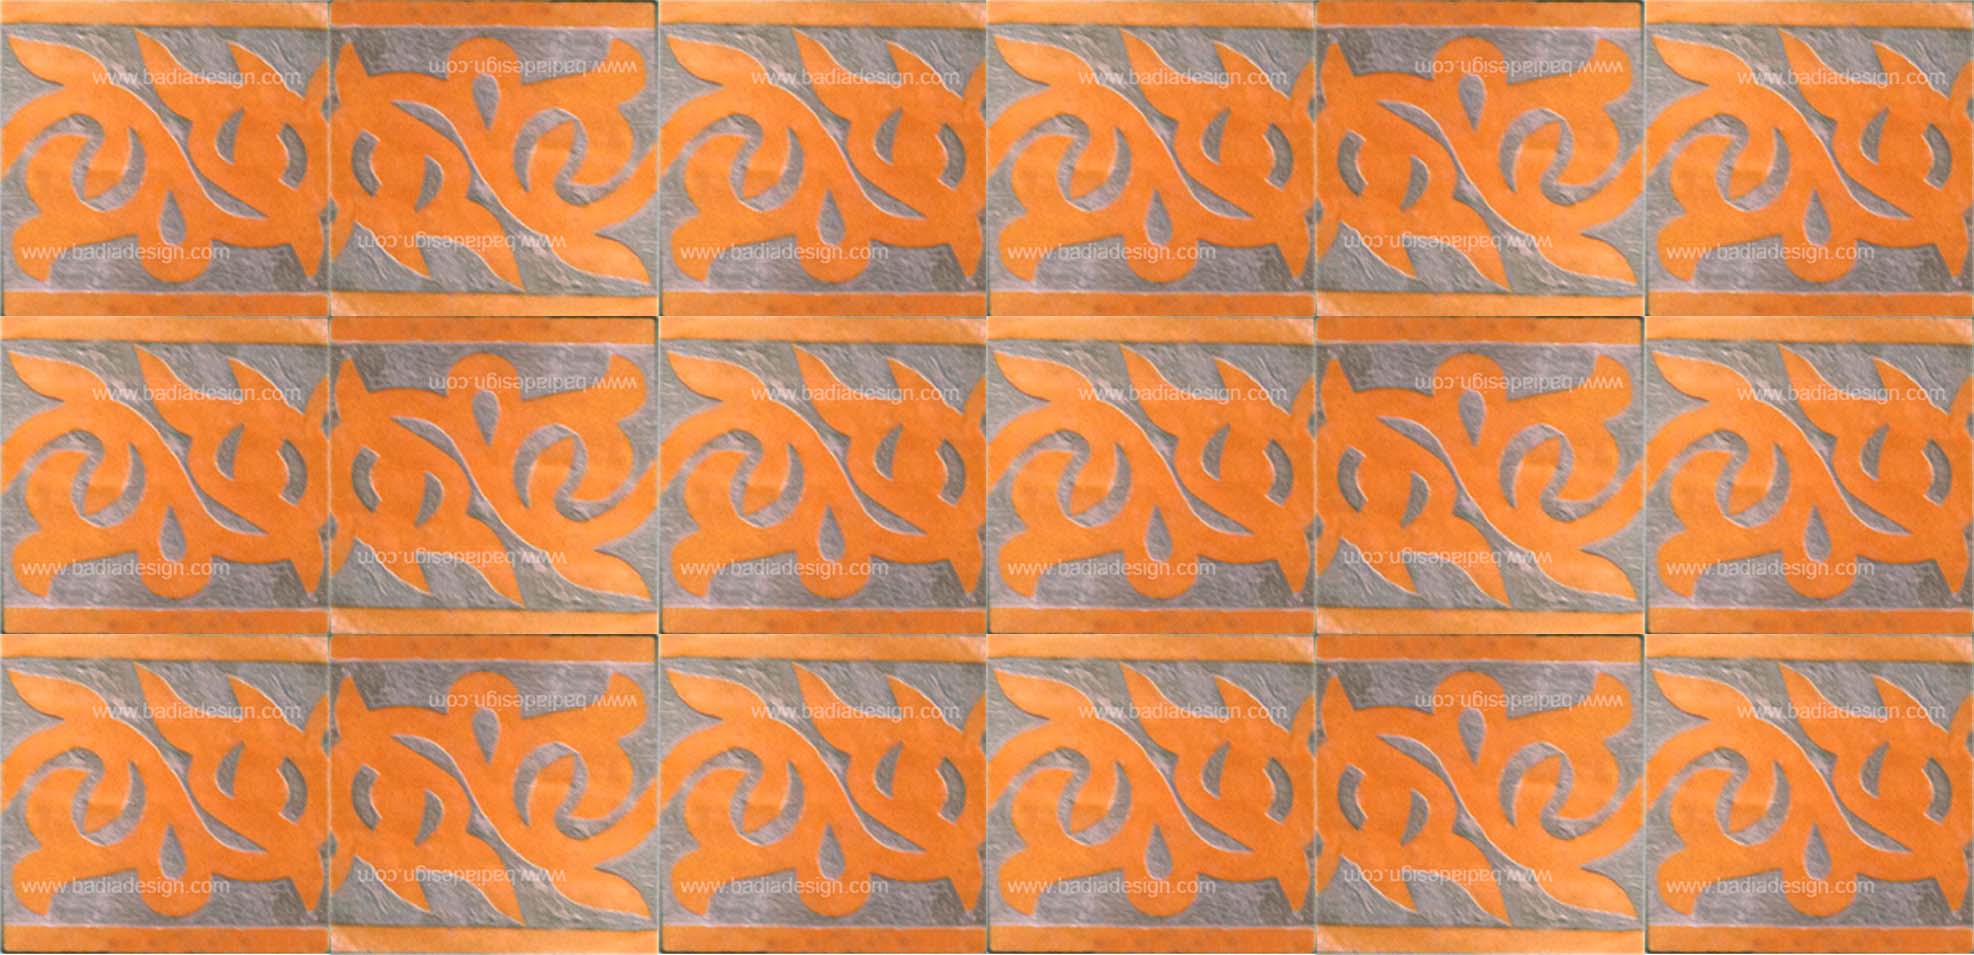 Hand Chiseled Tile from Badia Design Inc.